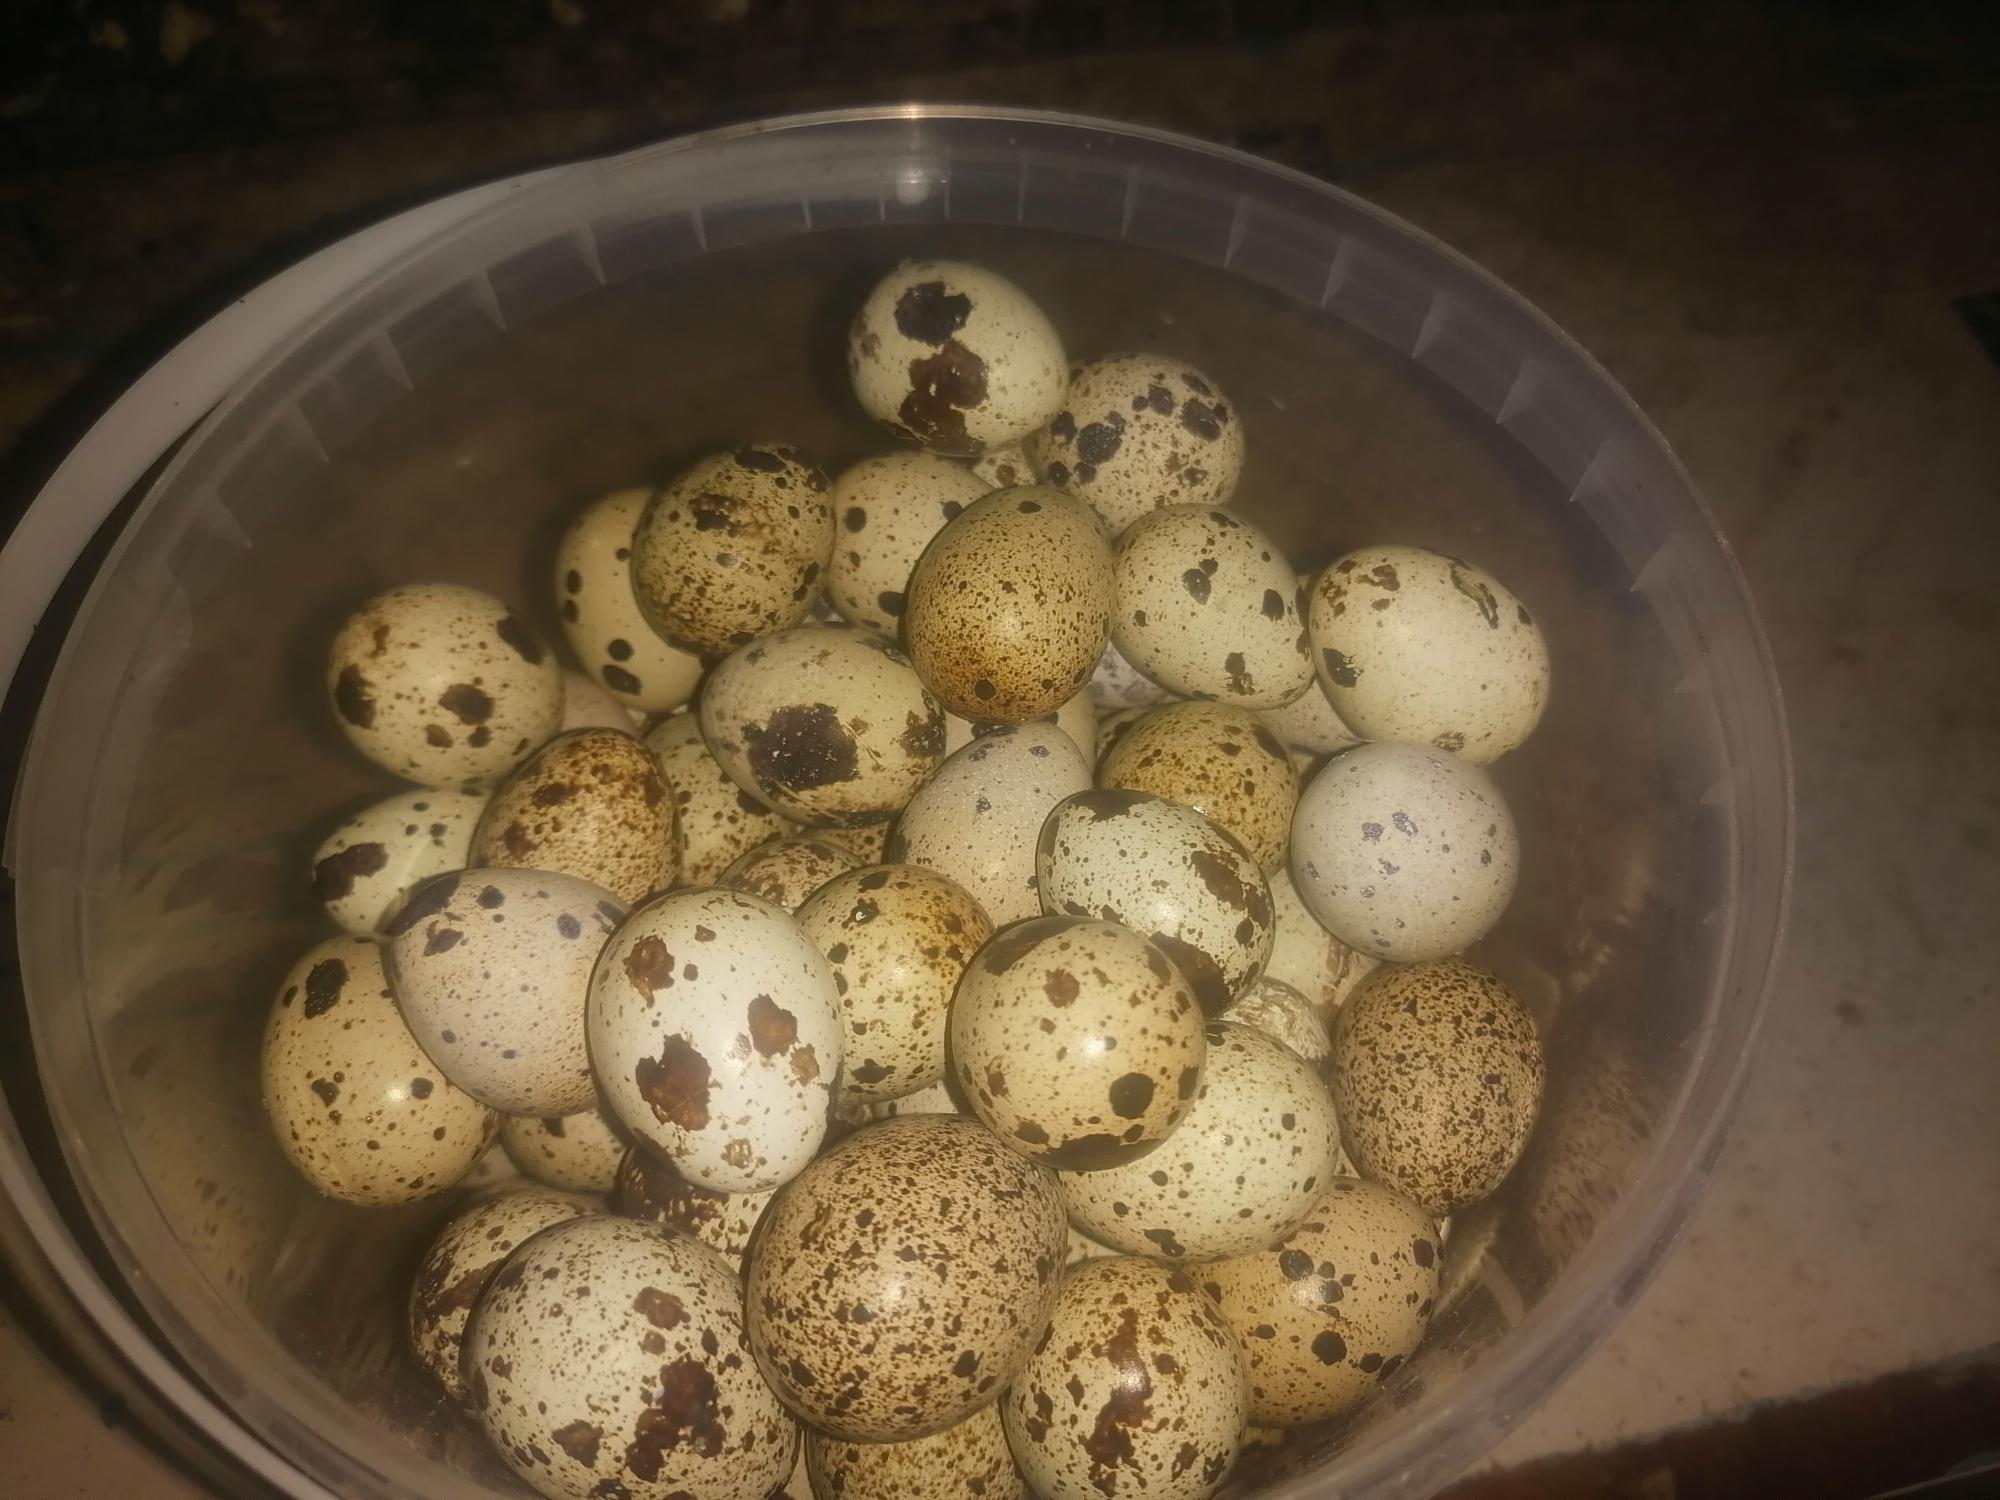 Перепелиные яйца